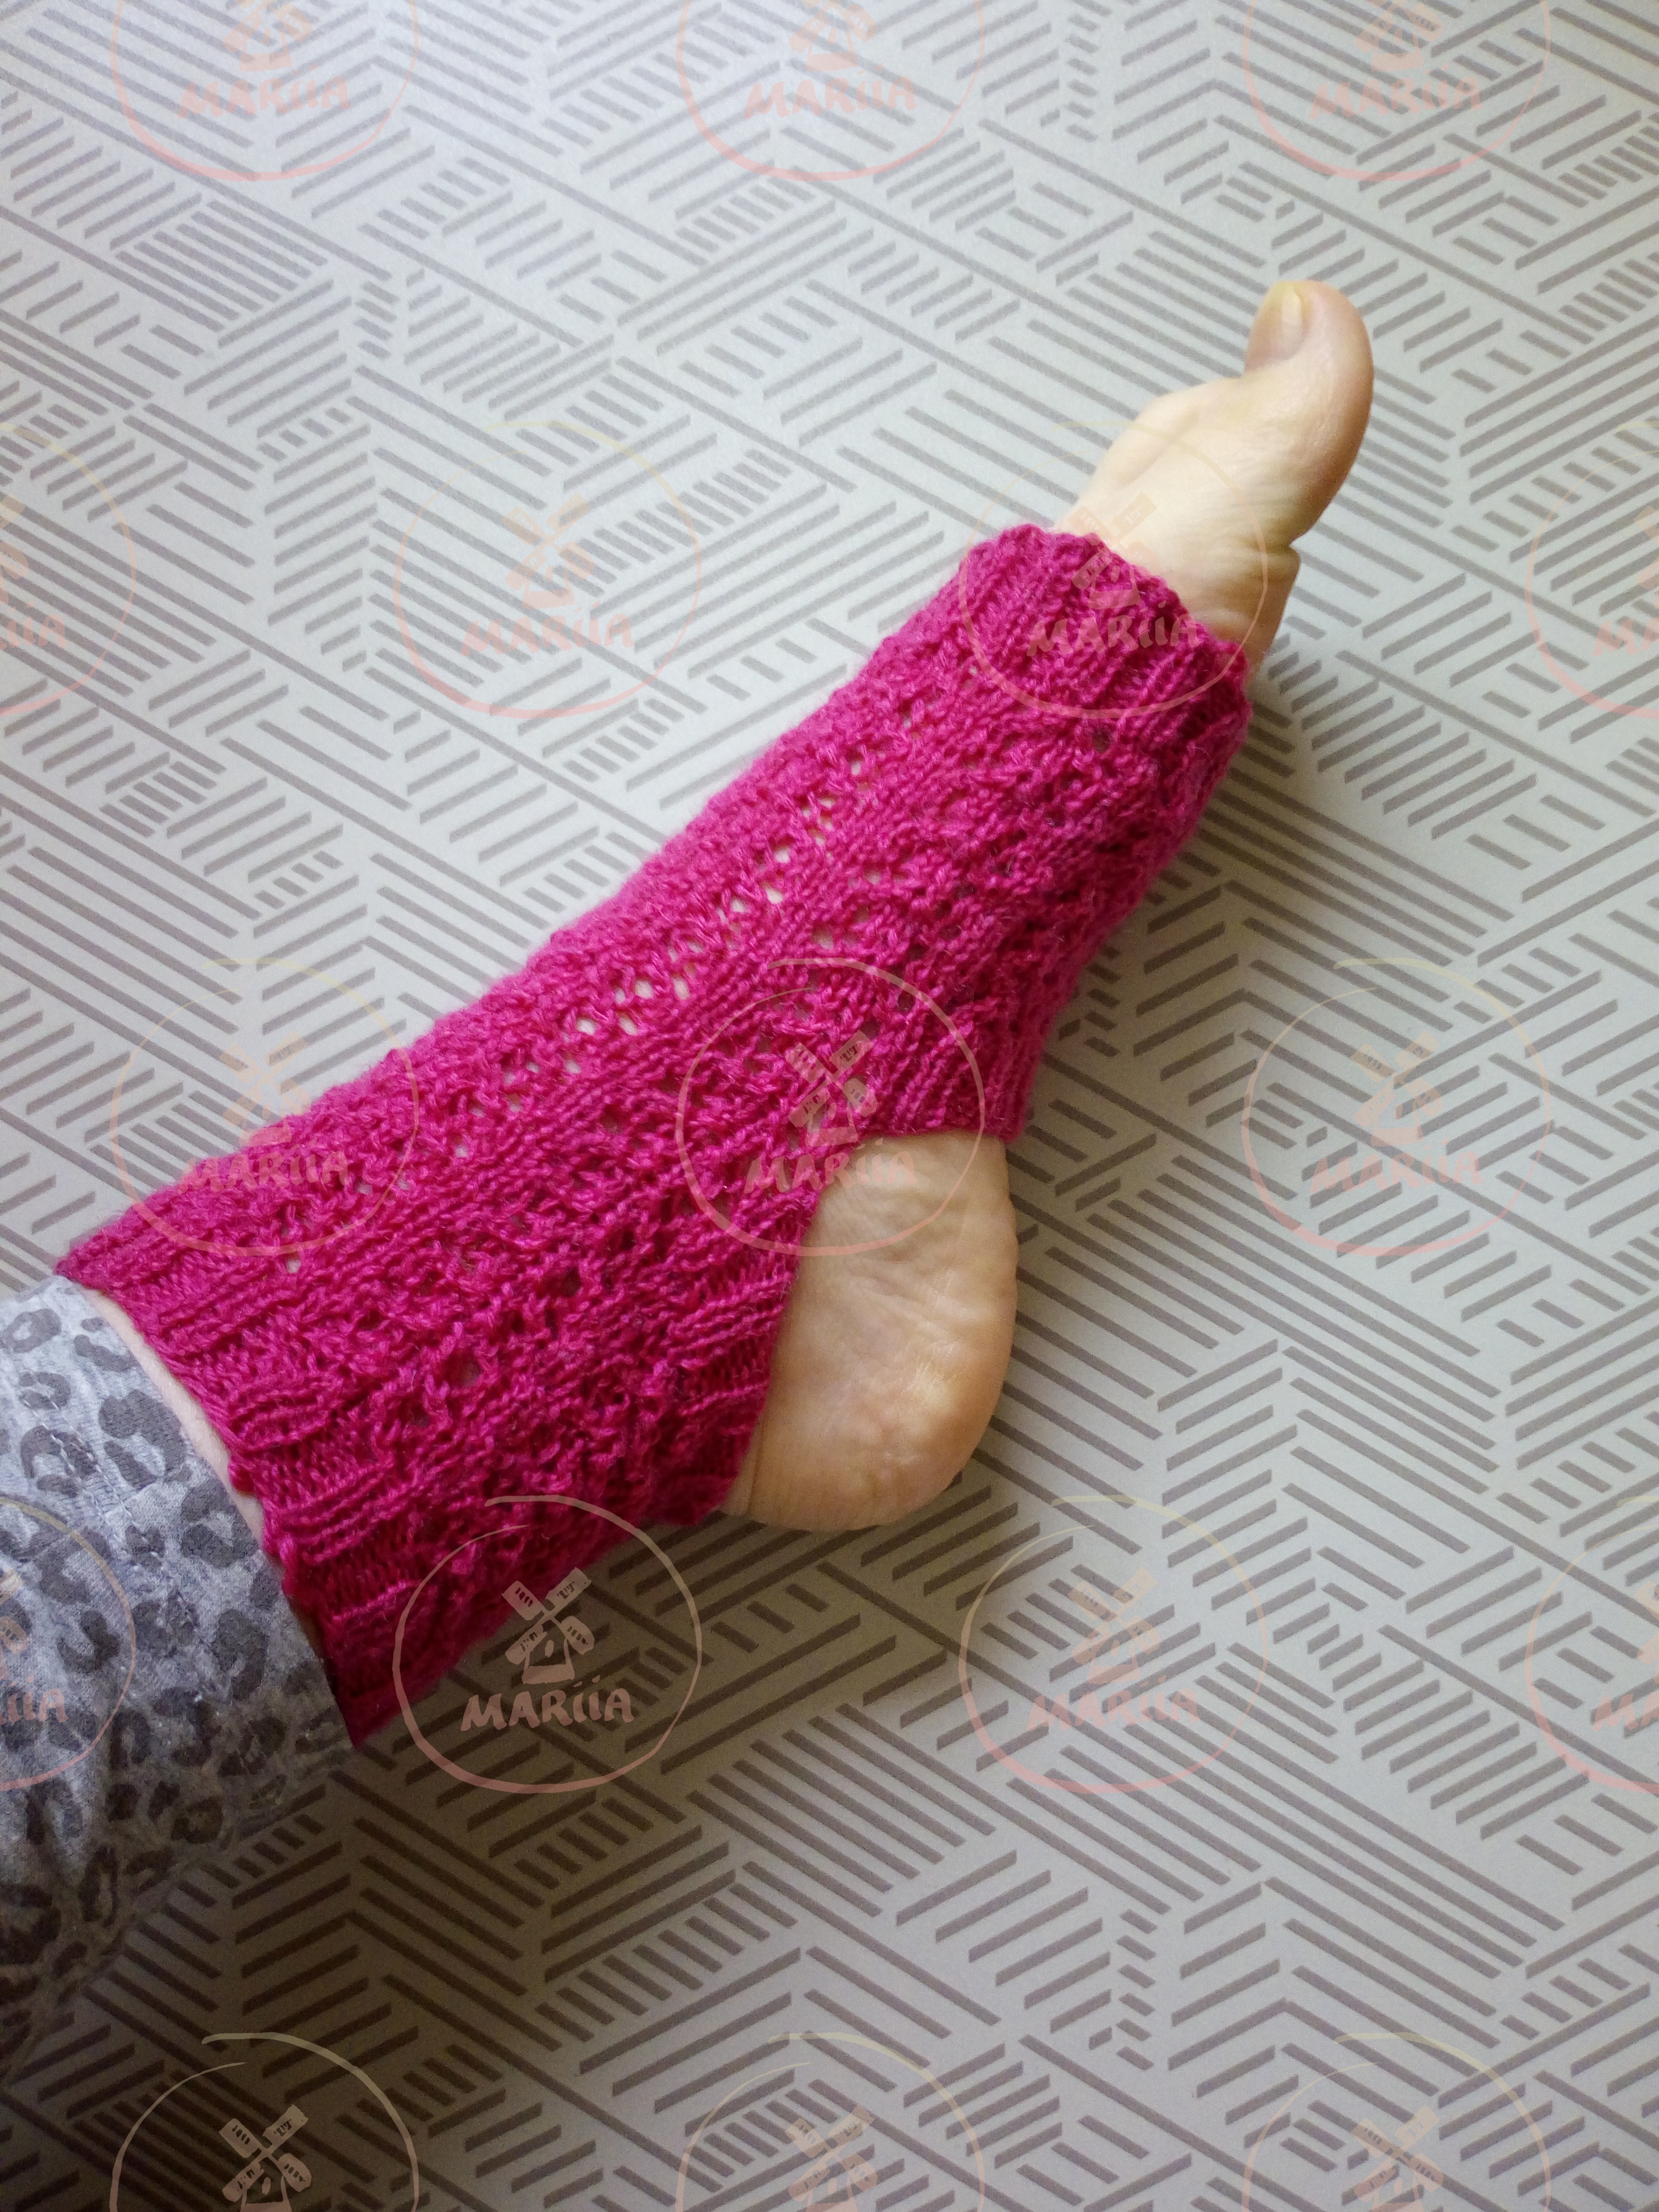 Yoga Socks - Free knitting patterns and crochet patterns by DROPS